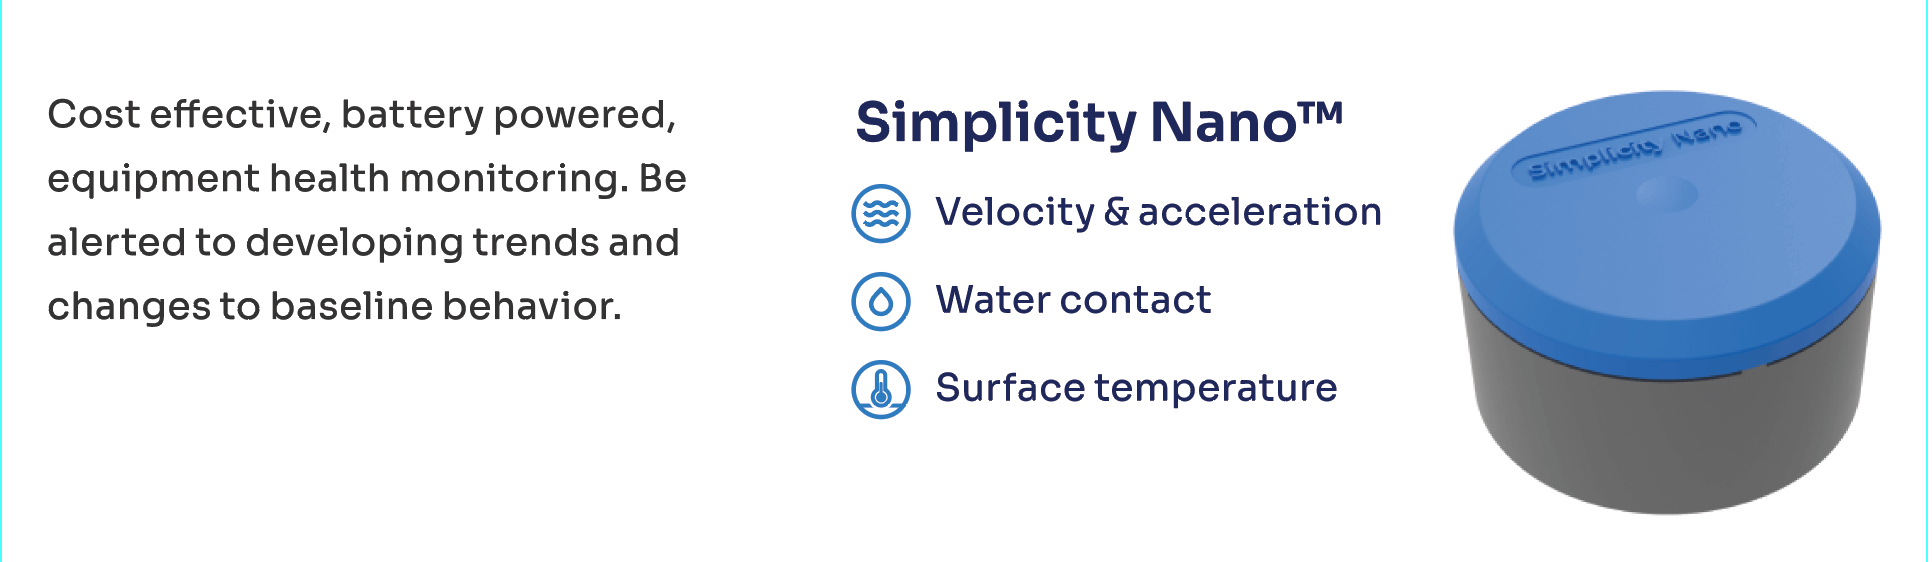 simplicity-nano-block